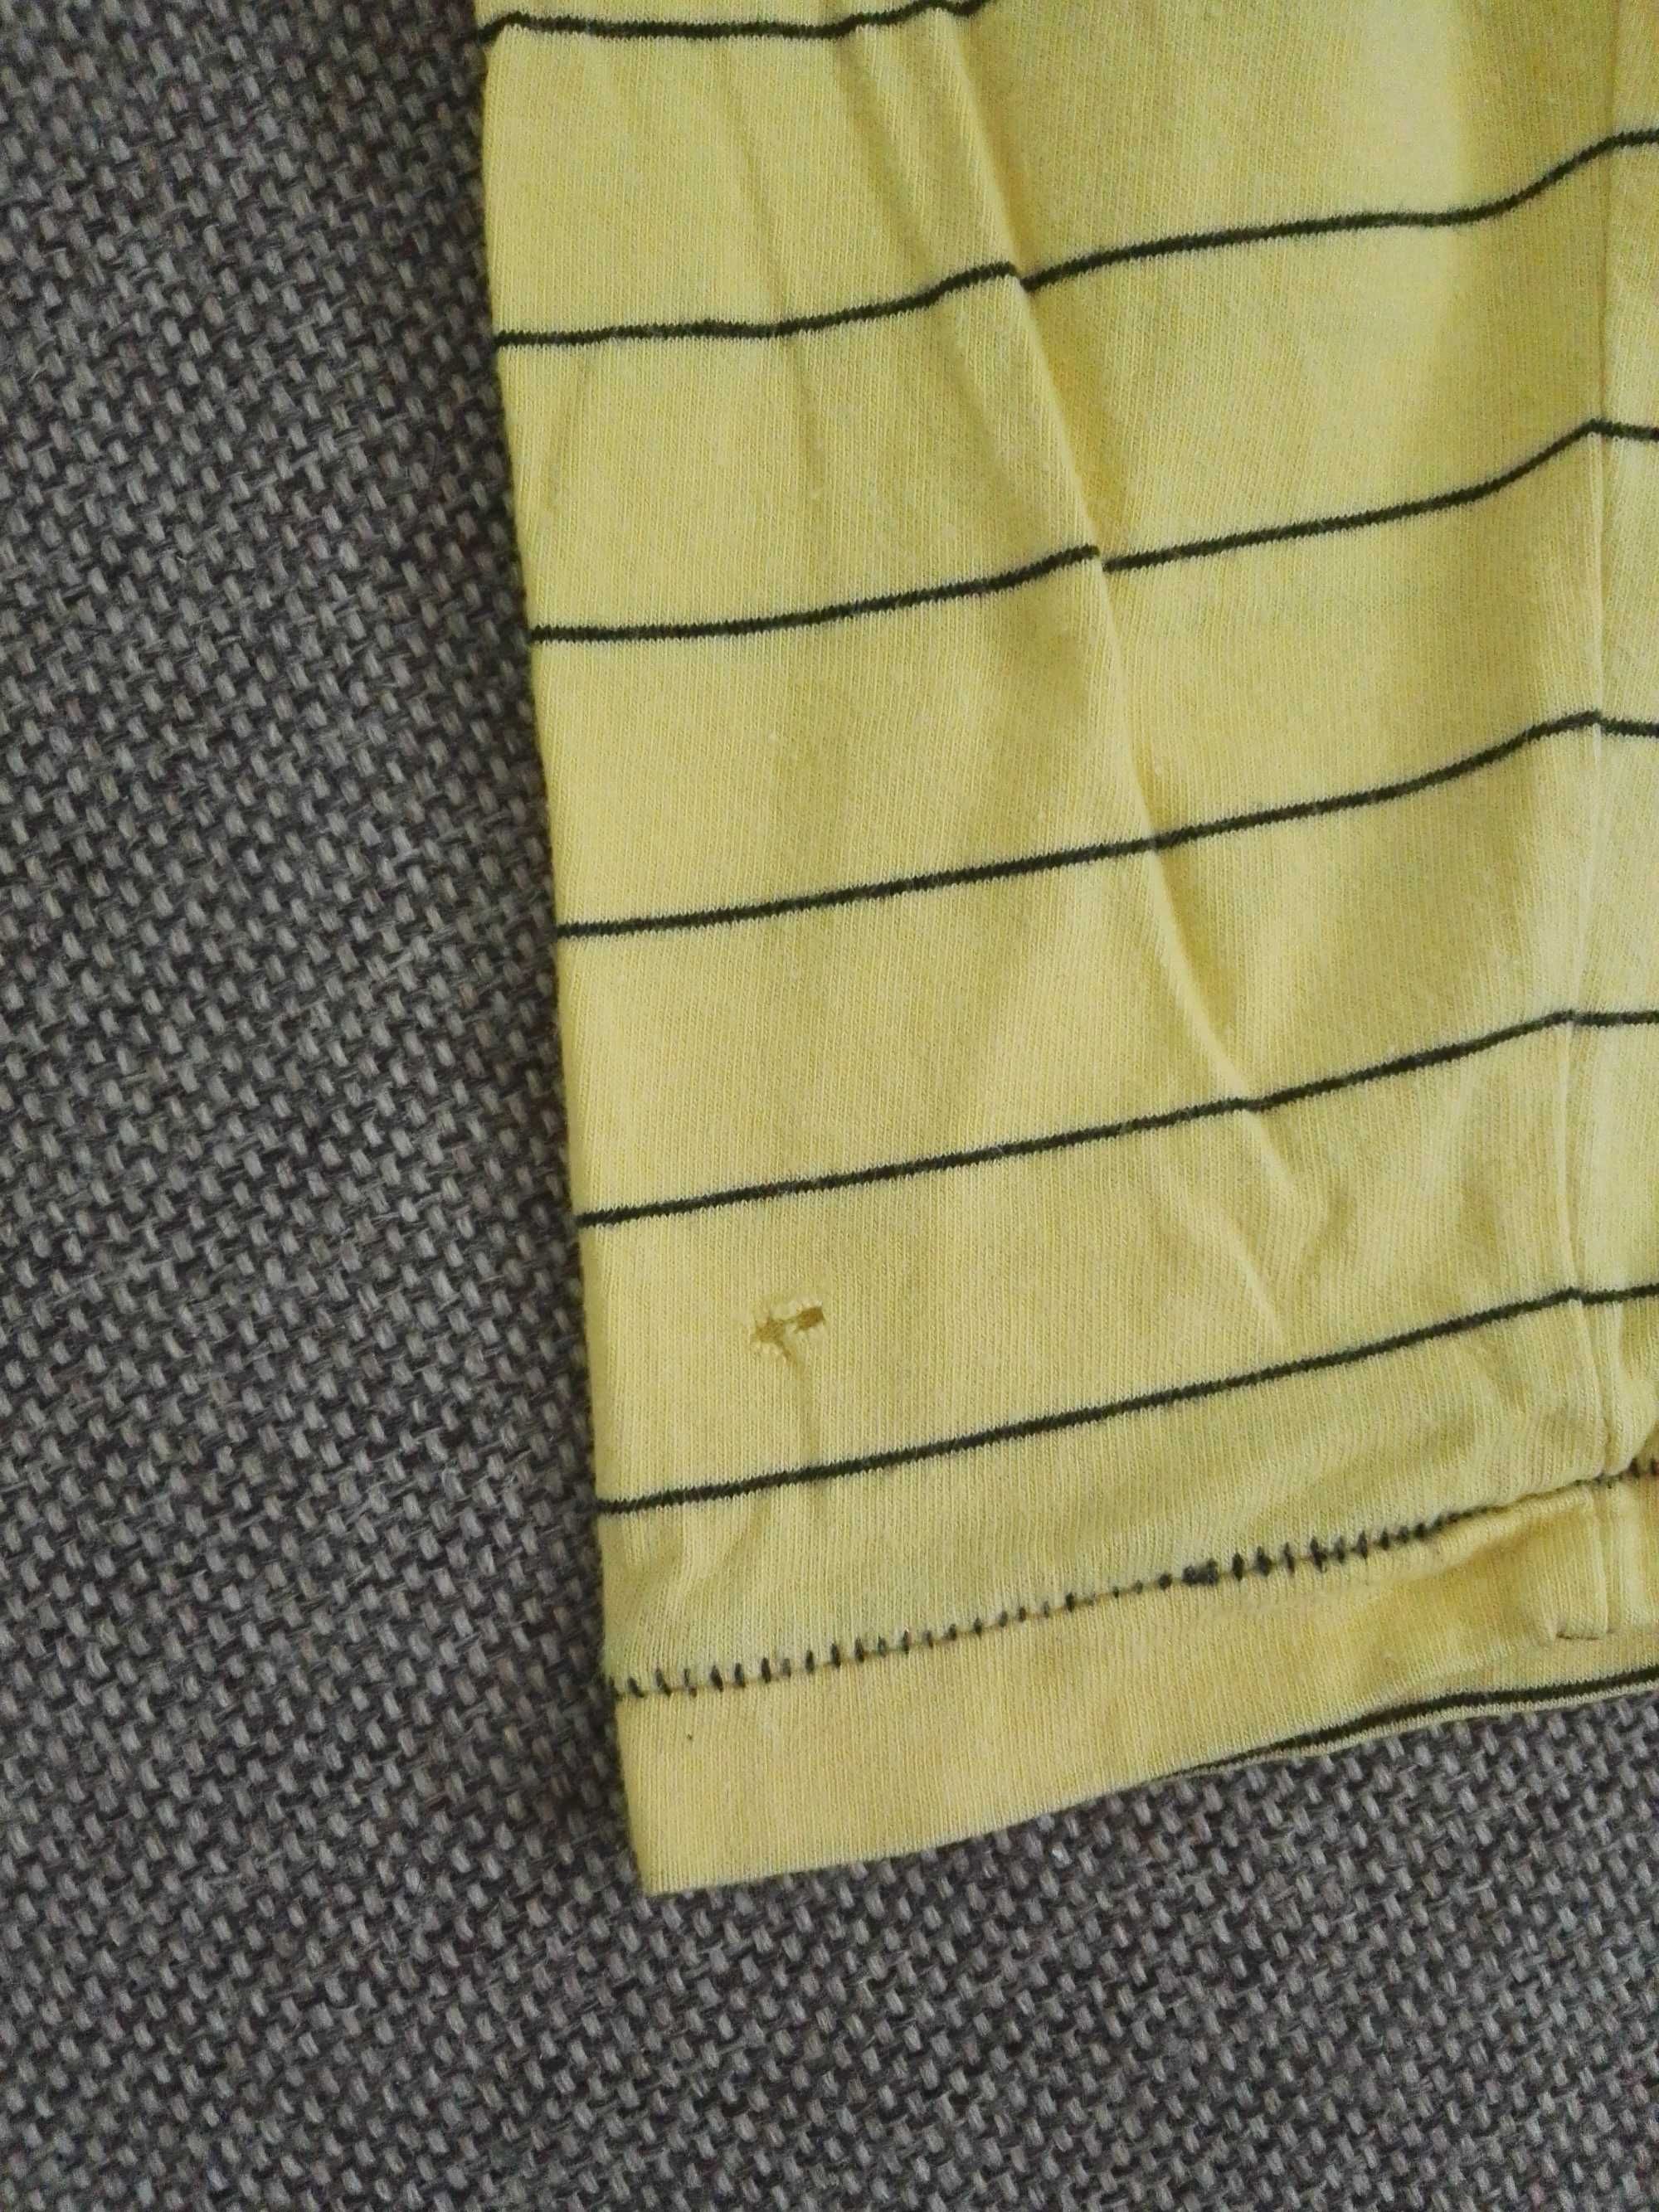 Bluza męska CRS, rozmiar L, żółta